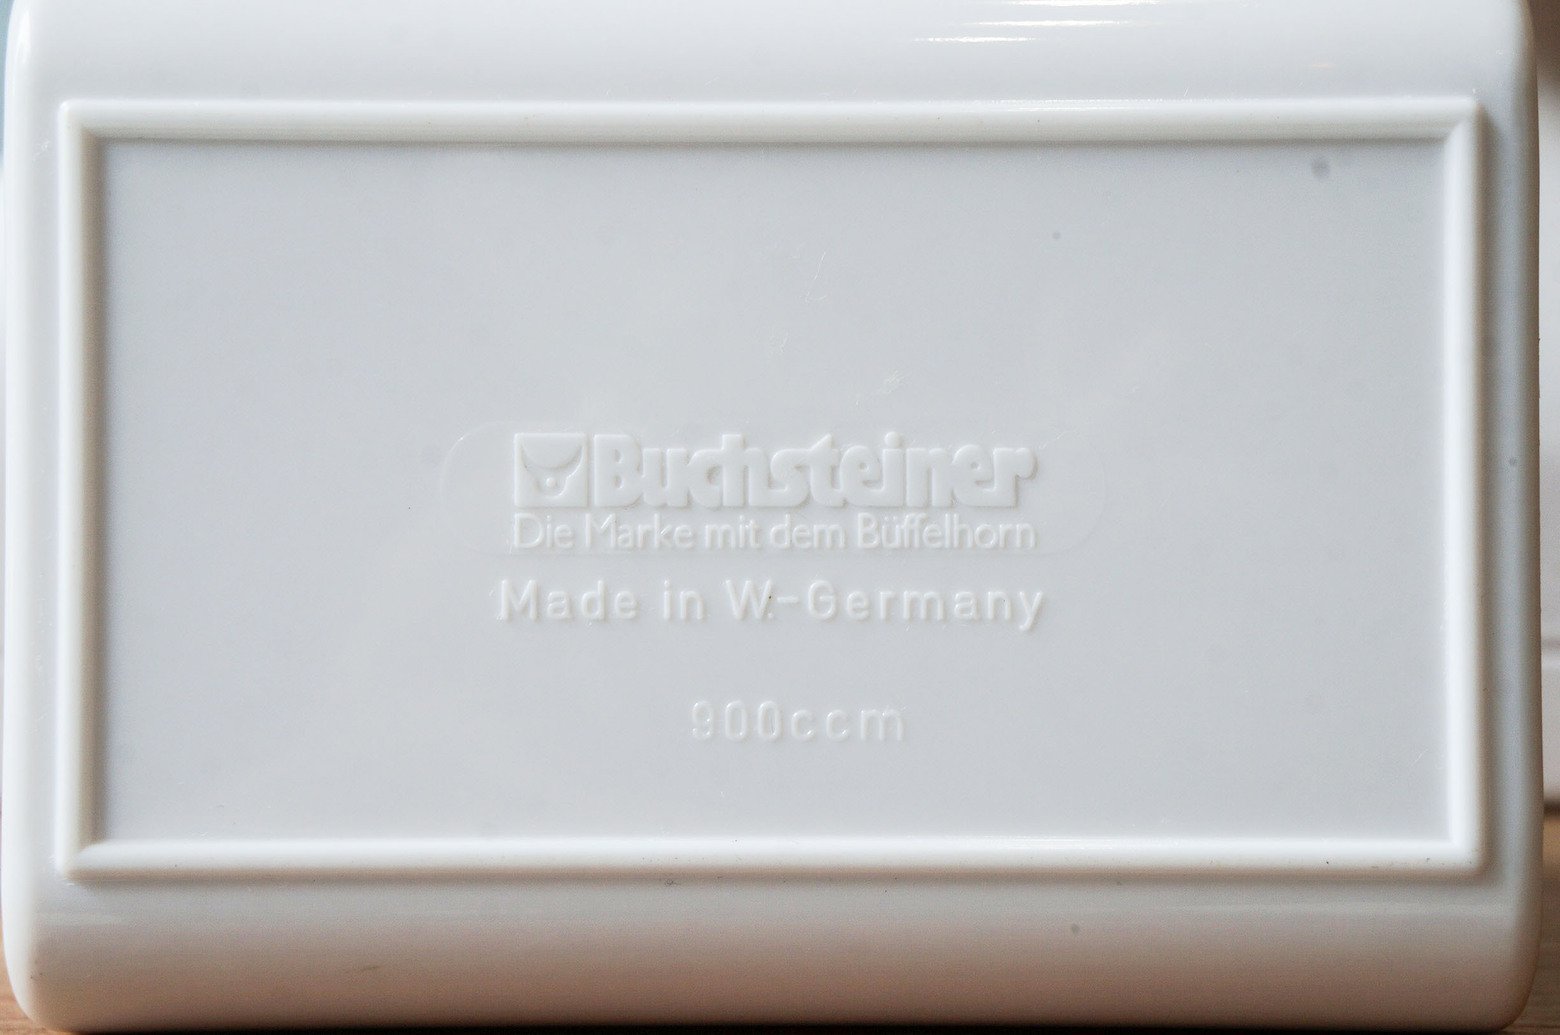 Buchsteiner Vintage Canister West Germany/ブッフシュタイナー ヴィンテージ キャニスター 西ドイツ